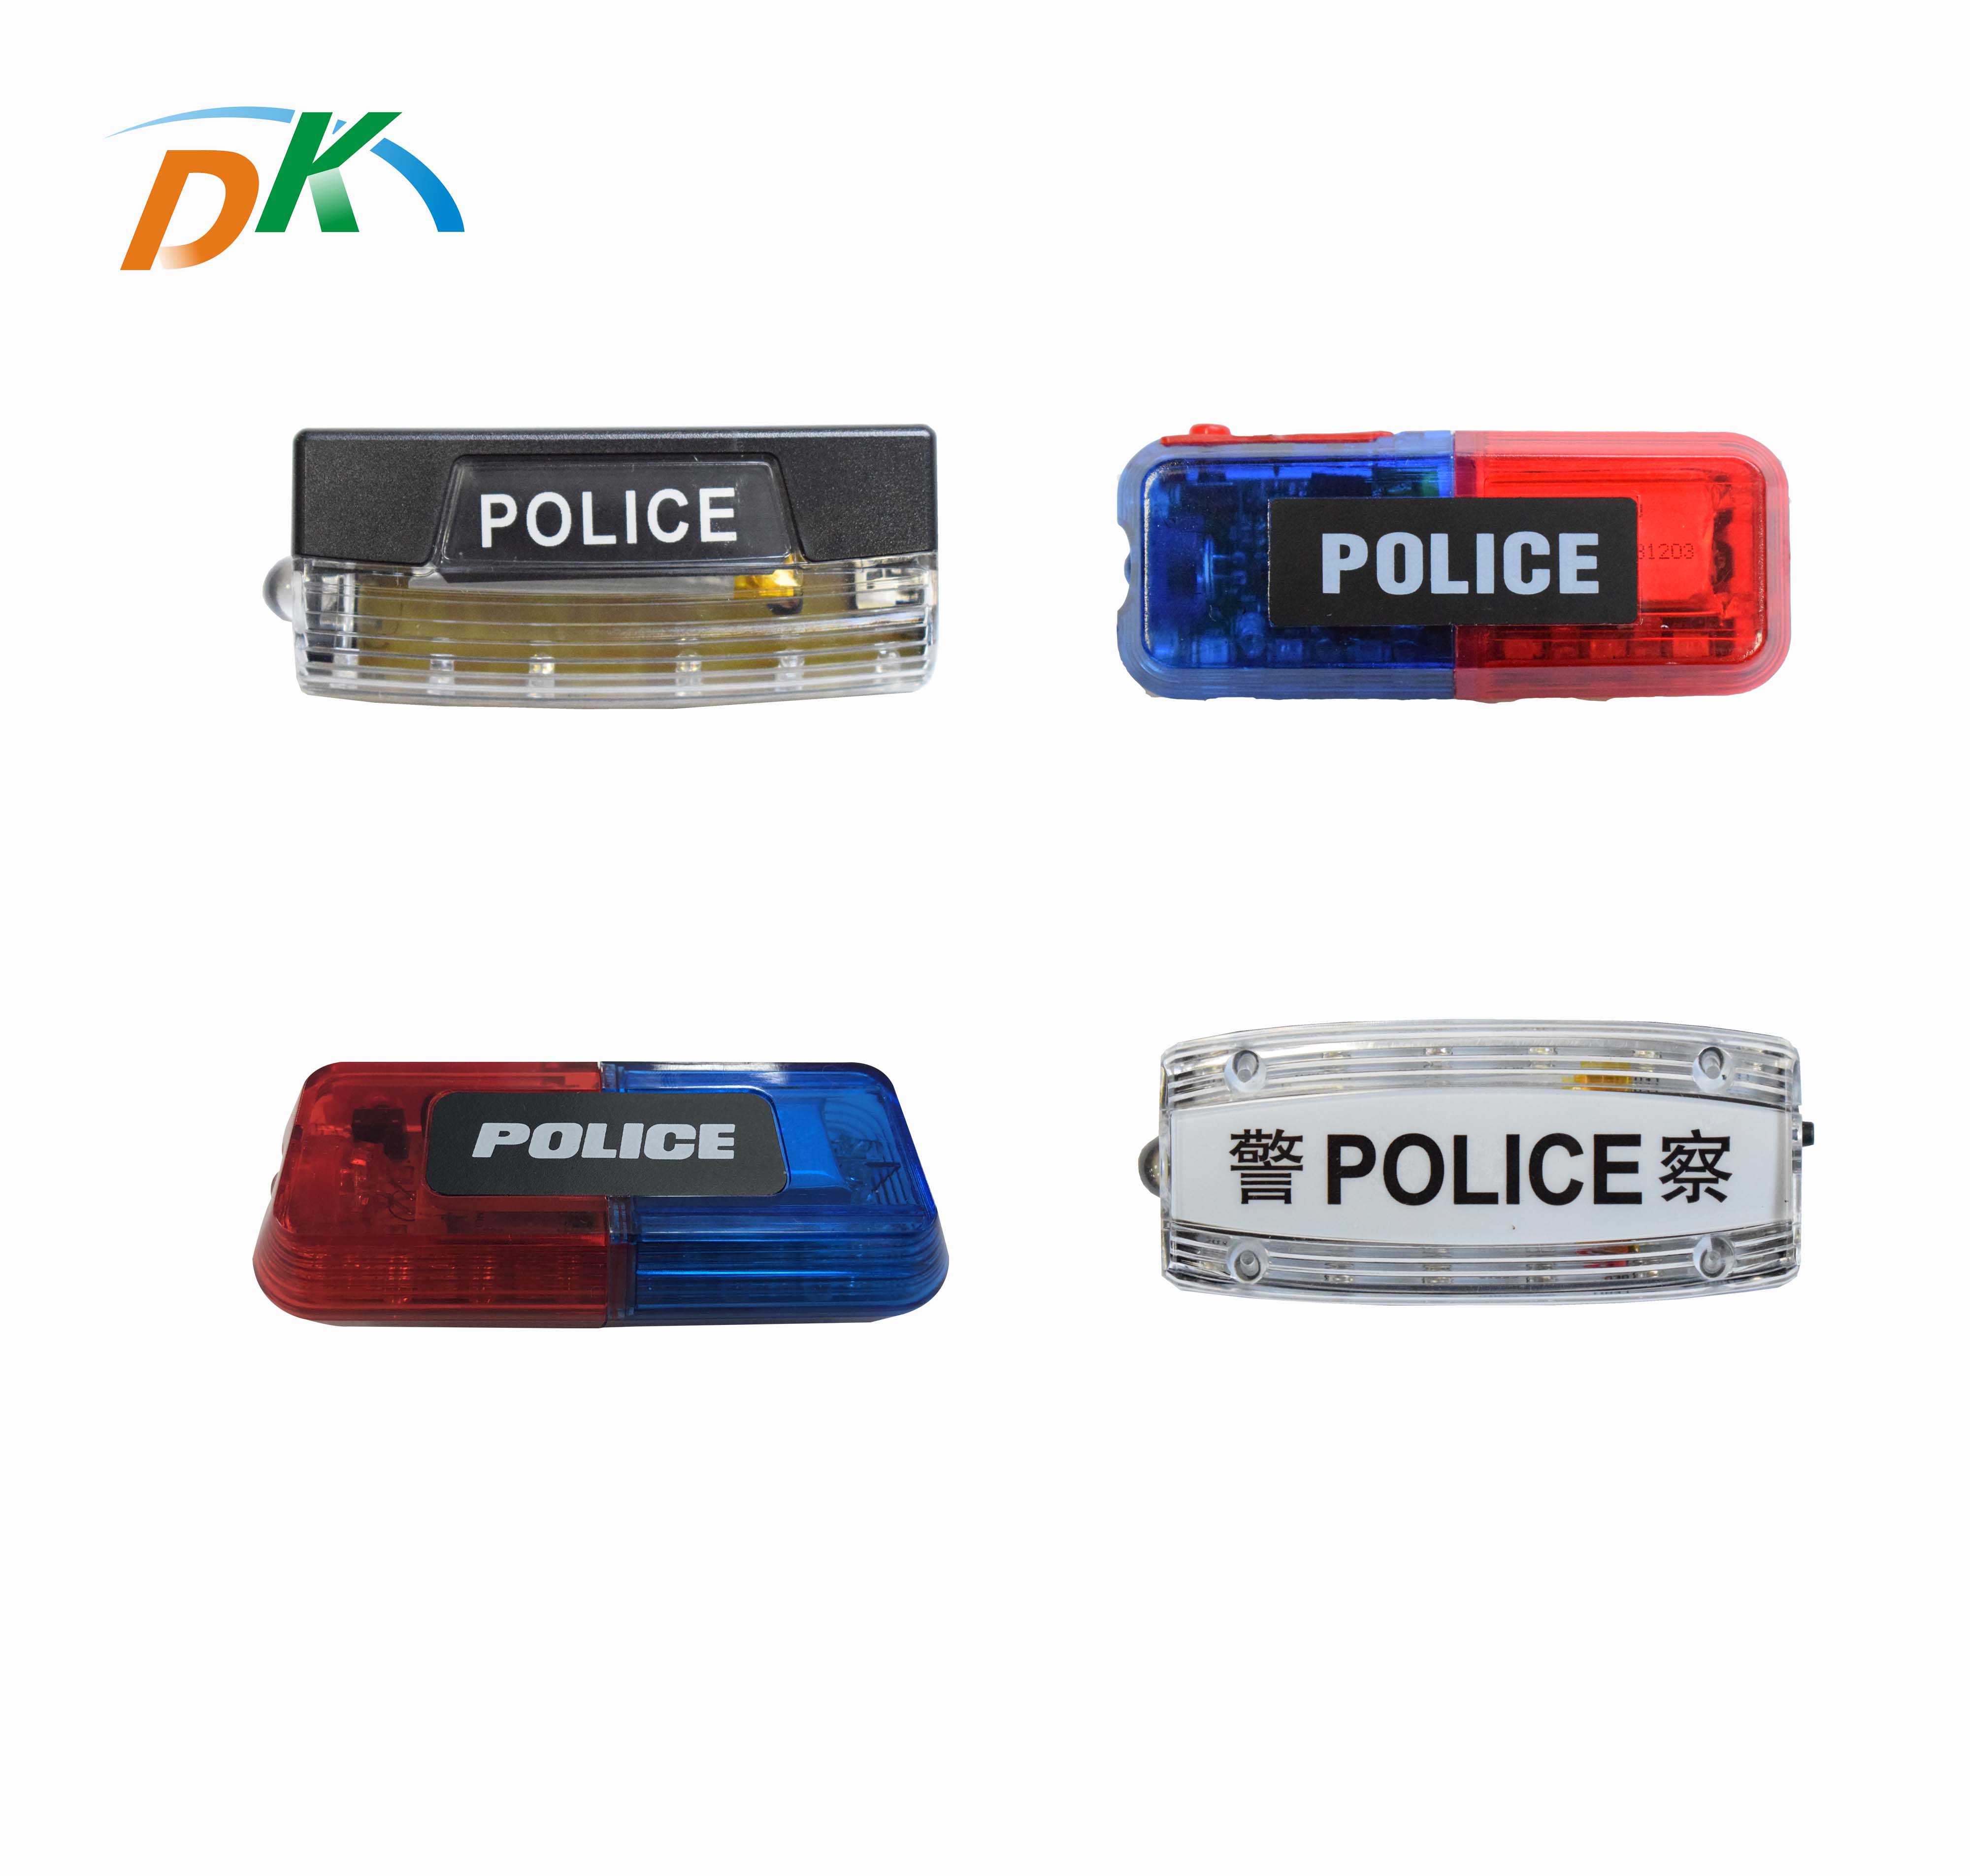 DK LED Manufacturers multi-functional wireless charging led emergency police shoulder light